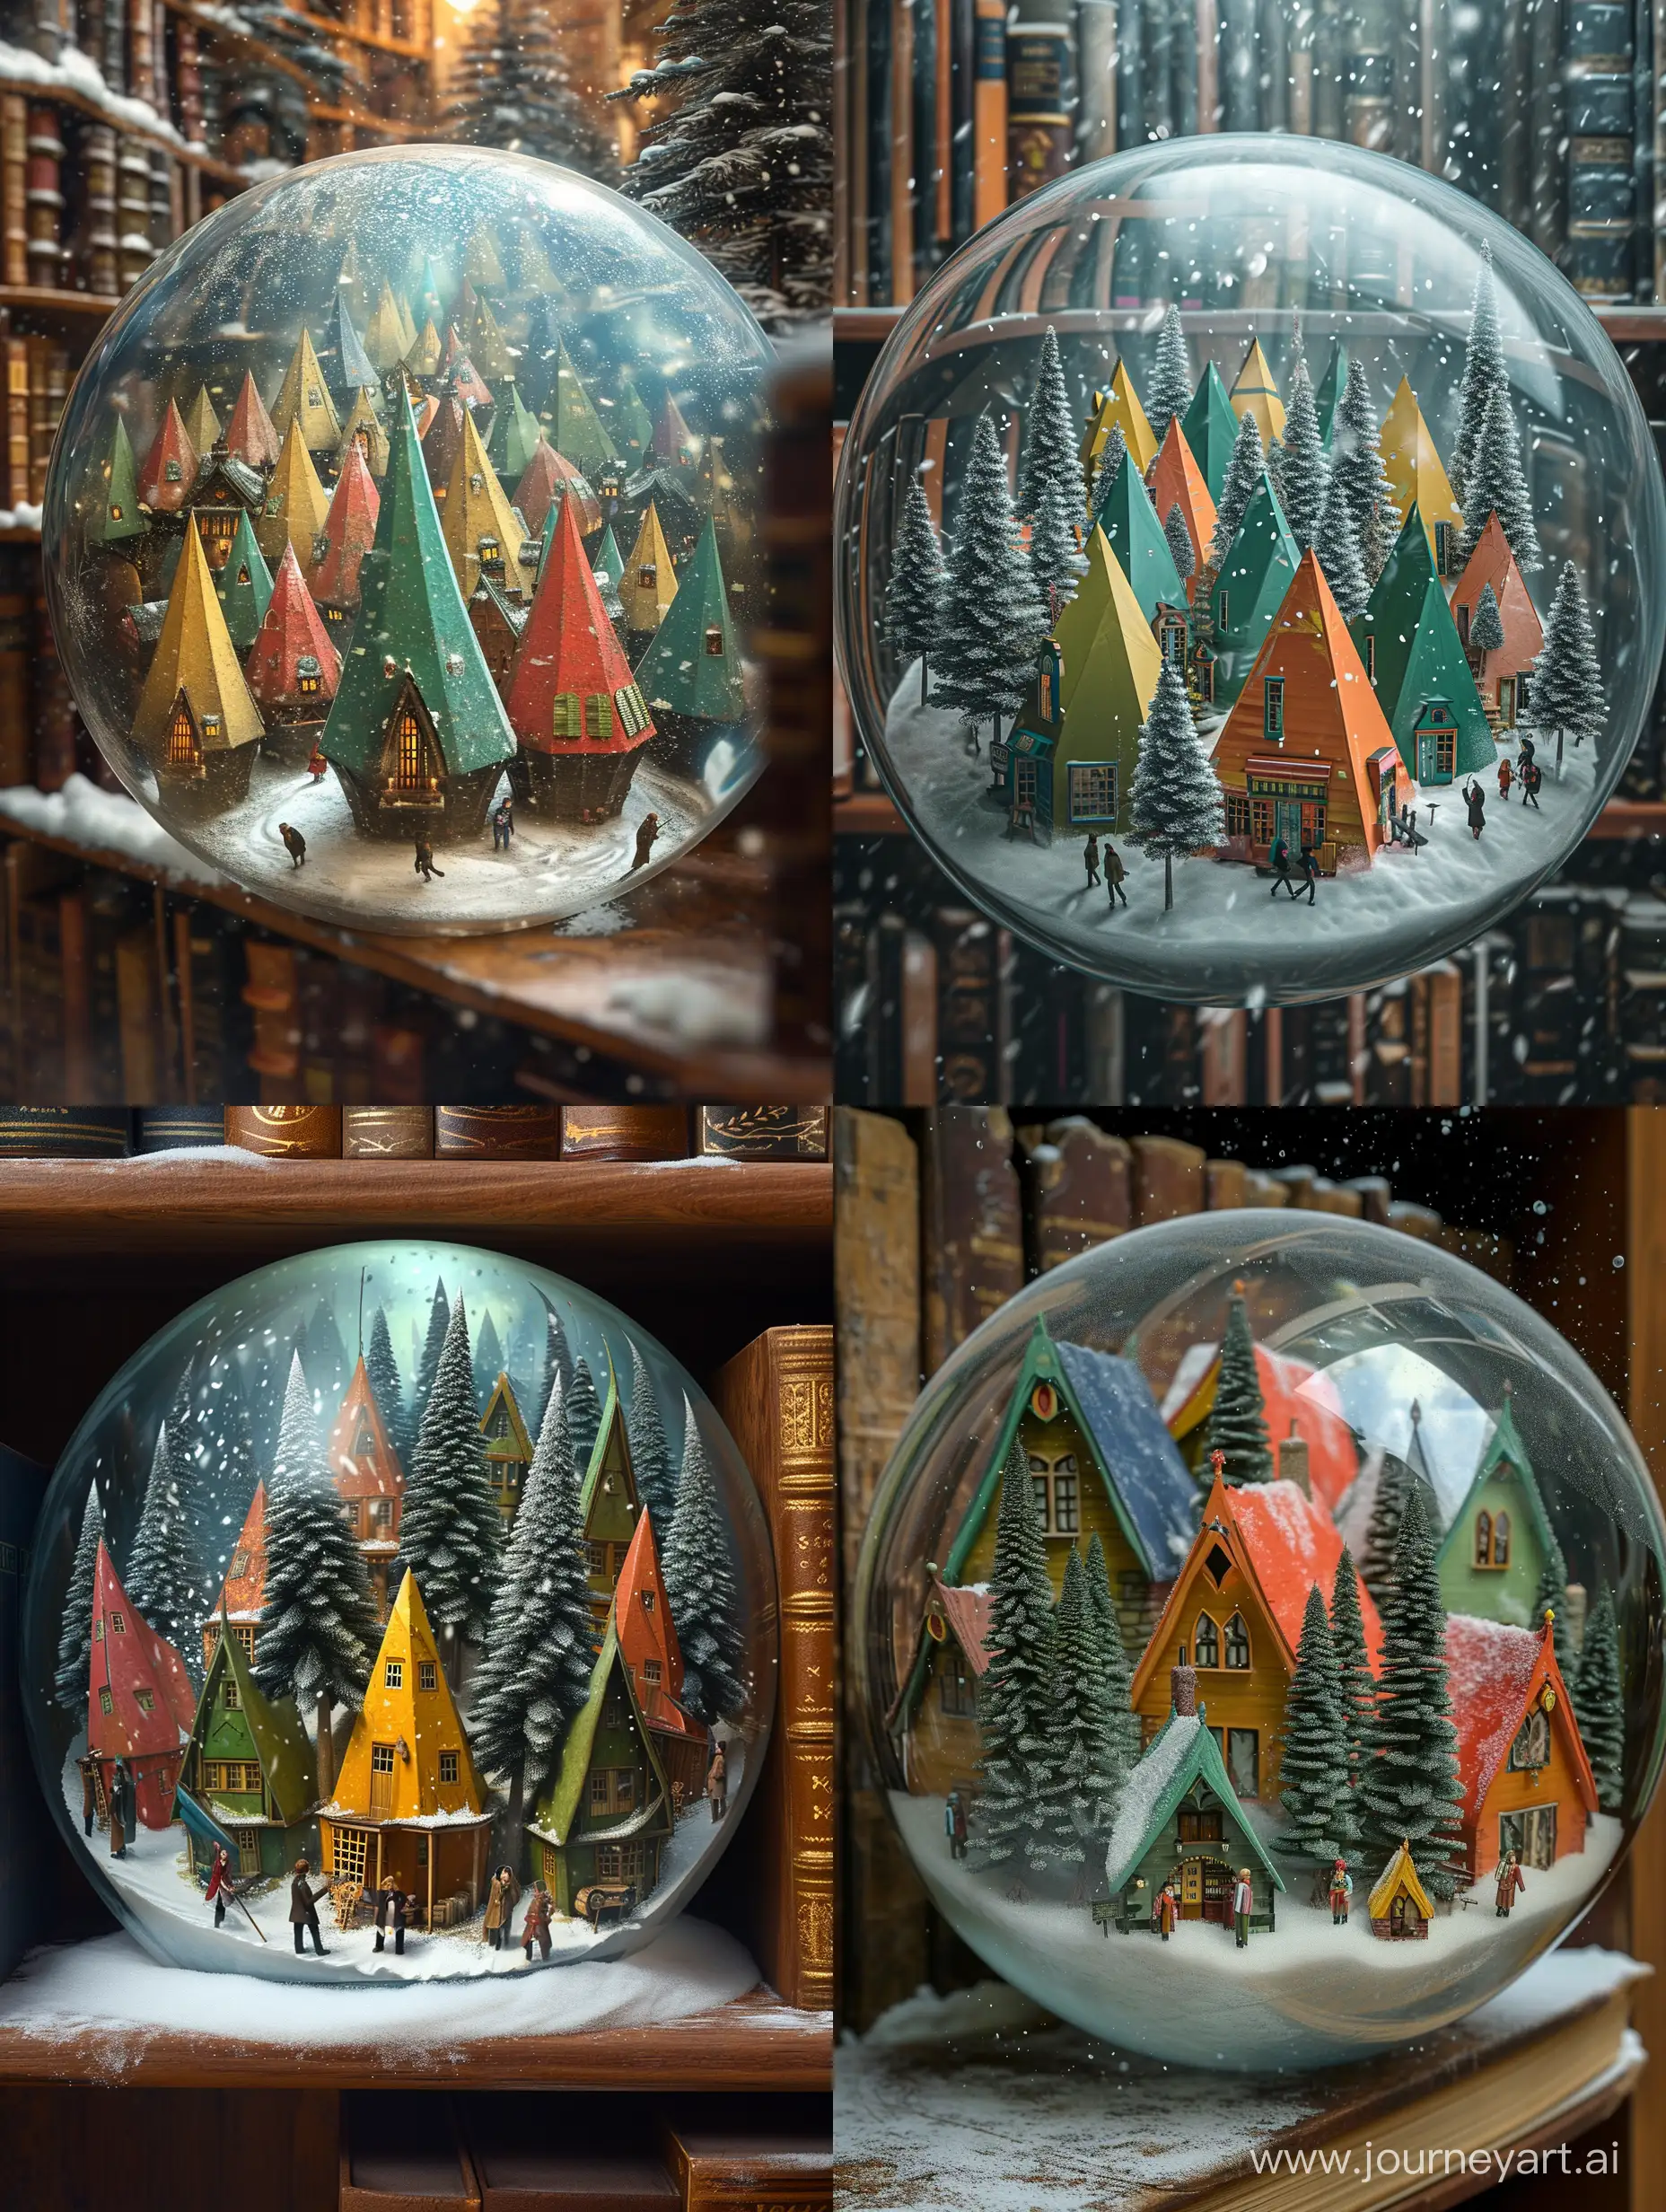 Magical-Winter-Village-Inside-a-Glass-Sphere